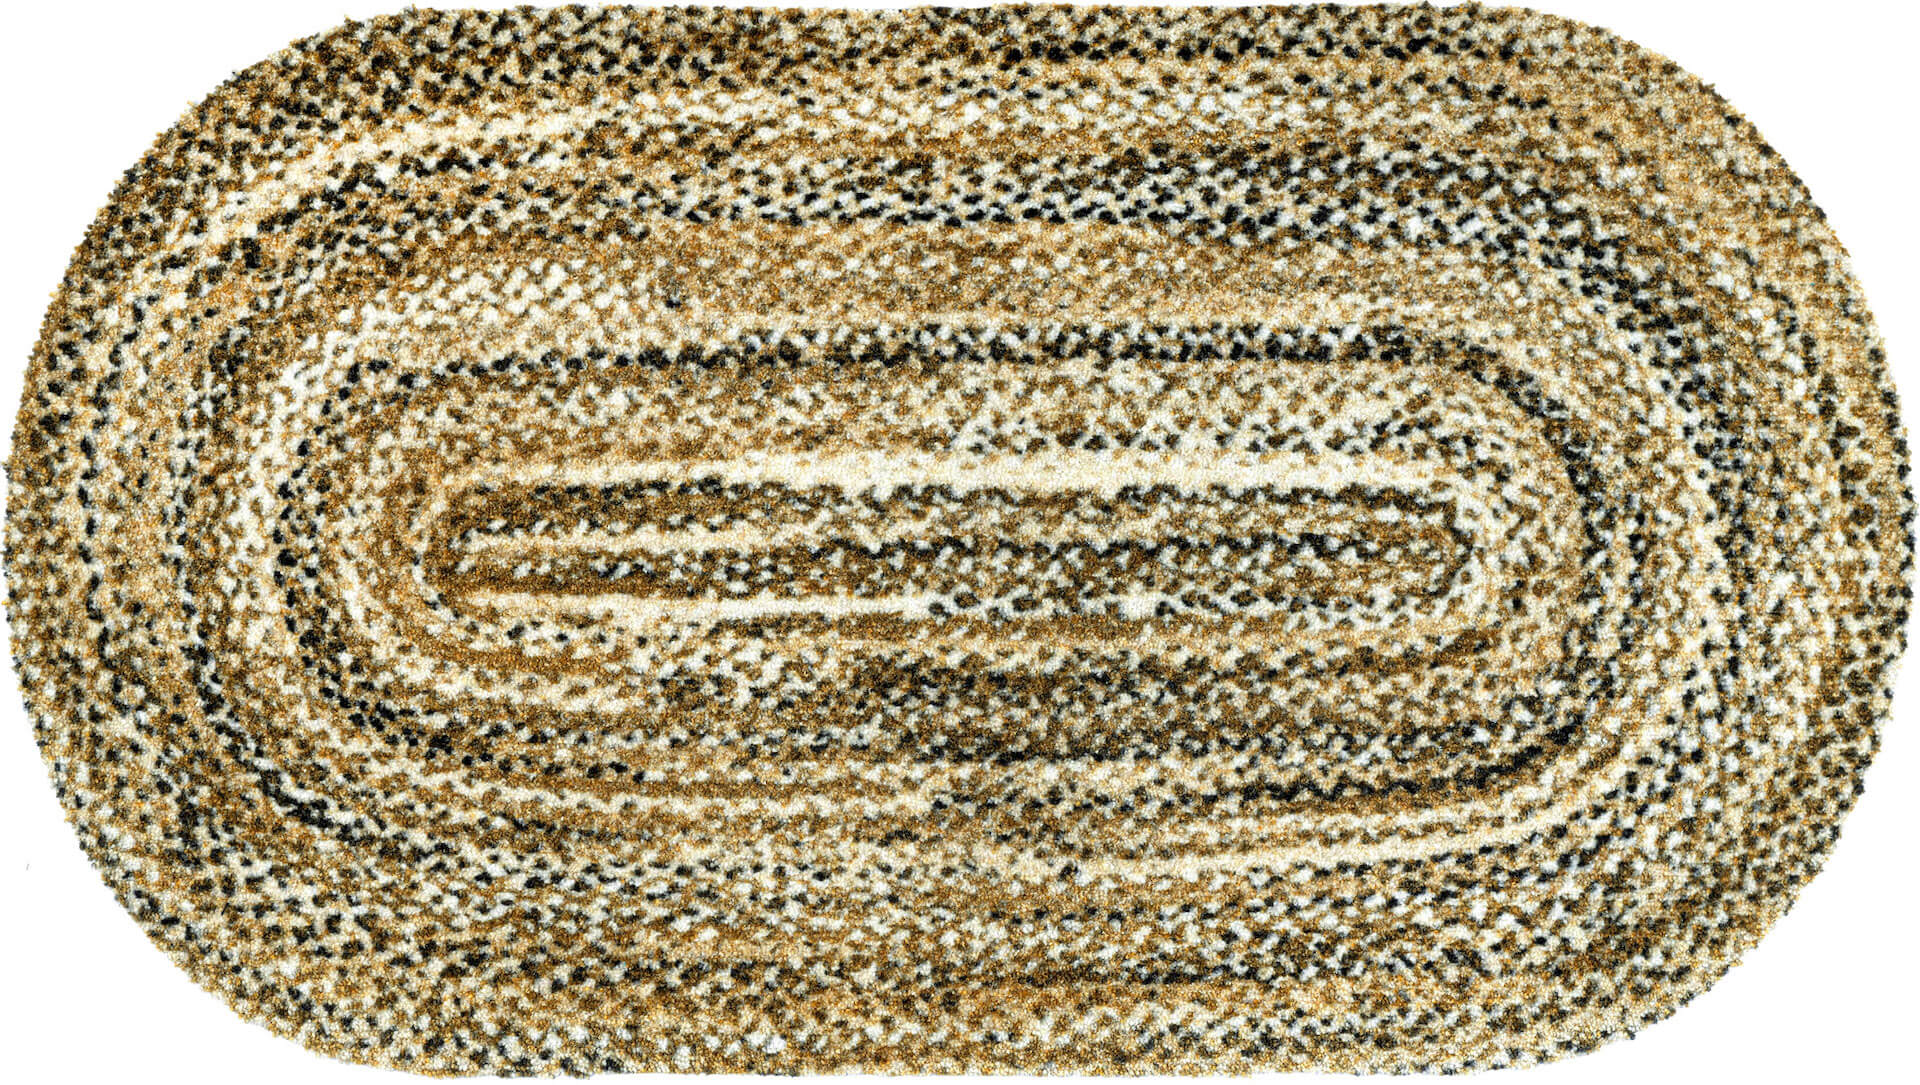 Randlose Fußmatte Wovells grain, wash & dry, 050 x 090 cm, Draufsicht